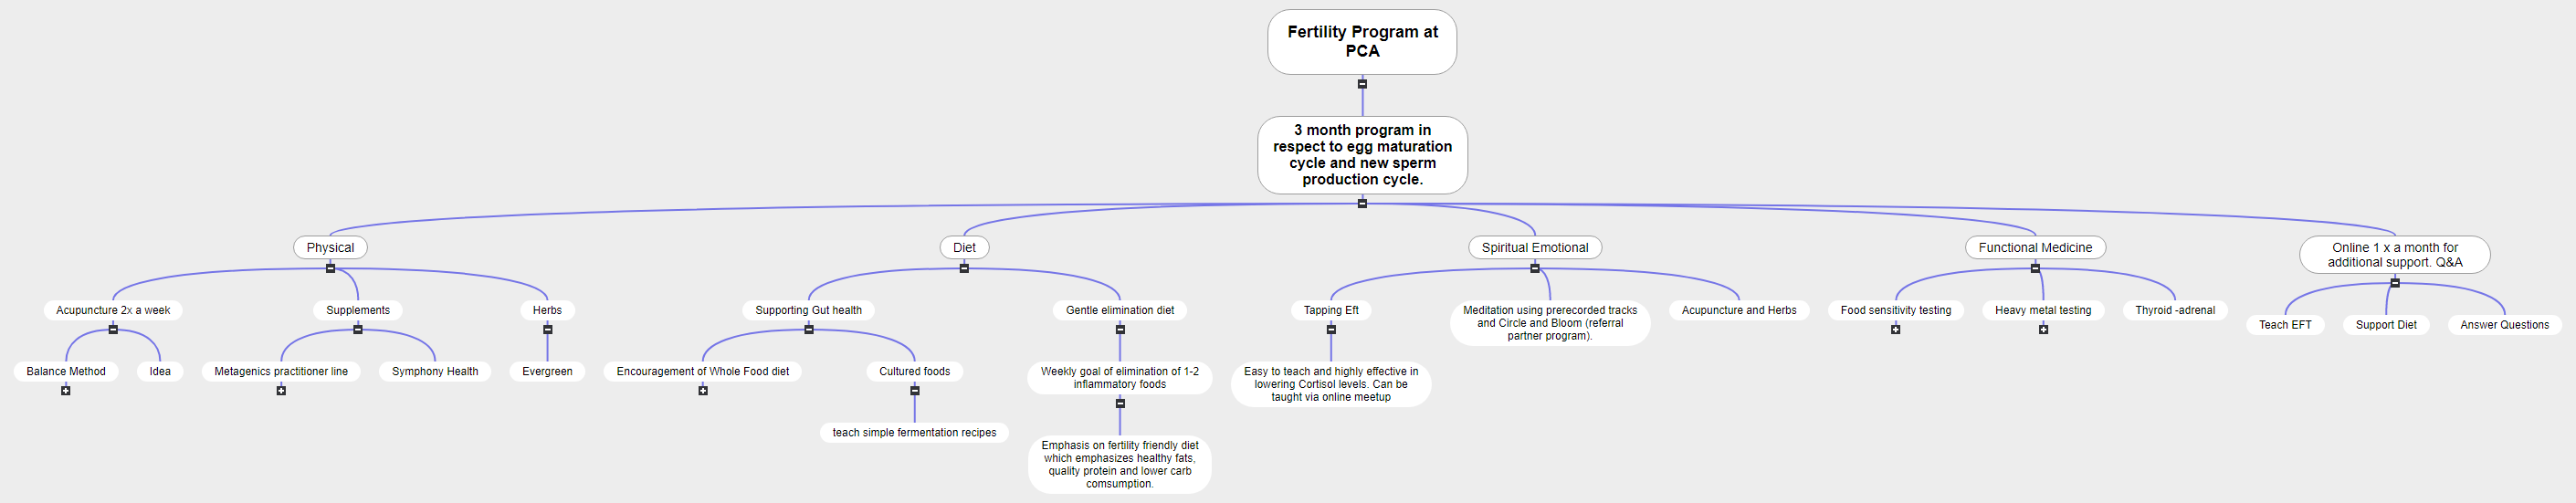 Fertility Program at PCA1(1) Mind Map